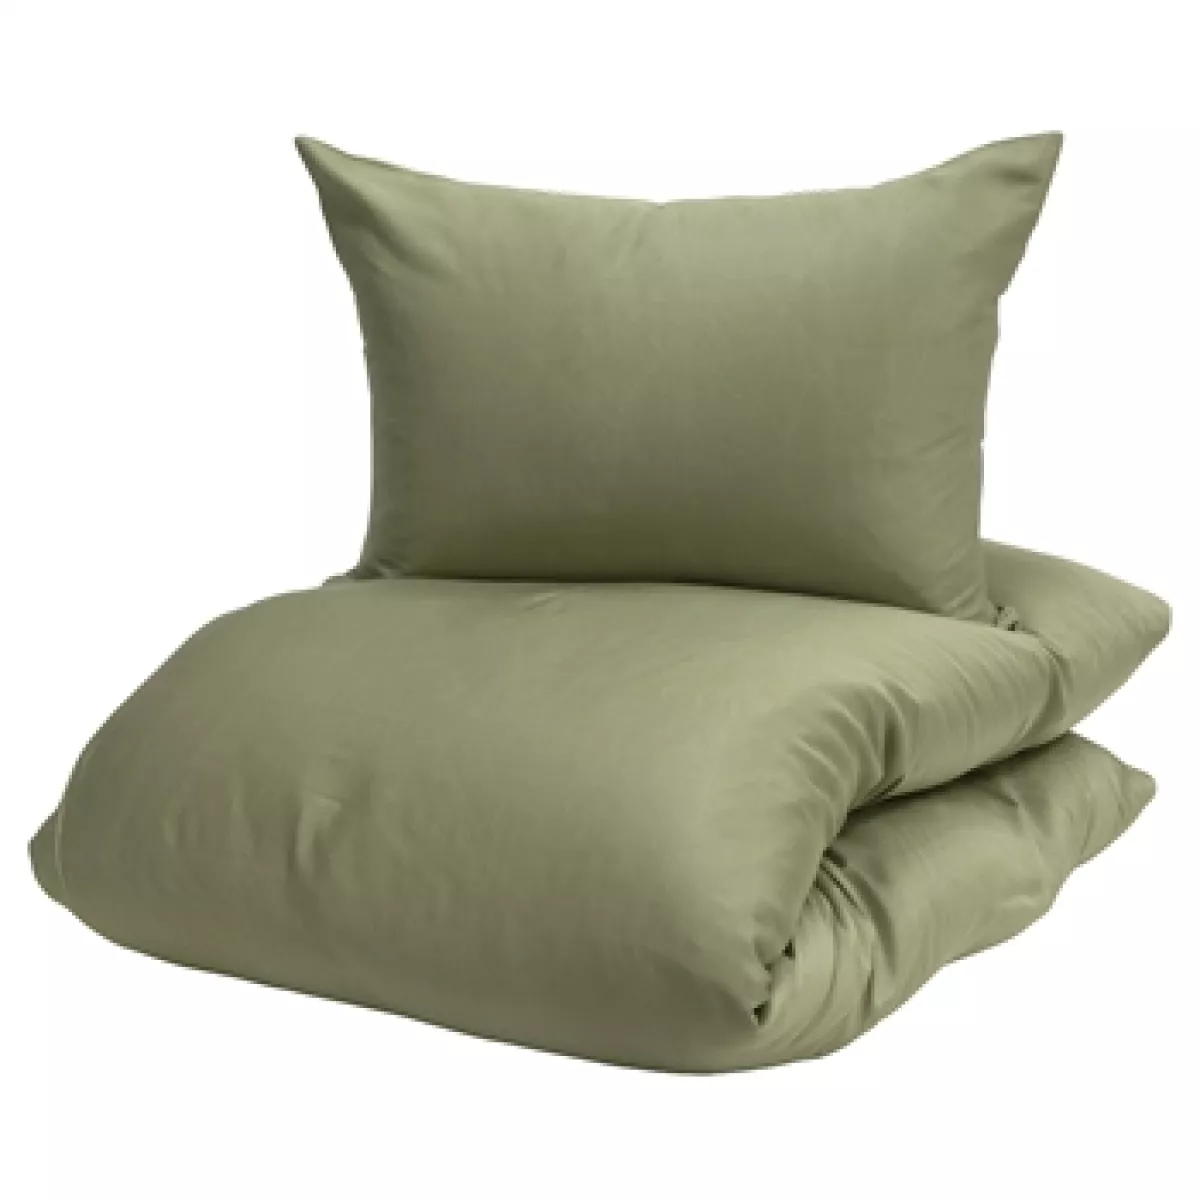 #3 - Turiform sengetøj - 140x200 cm - Enjoy grønt sengesæt - 100% Bambus sengetøj